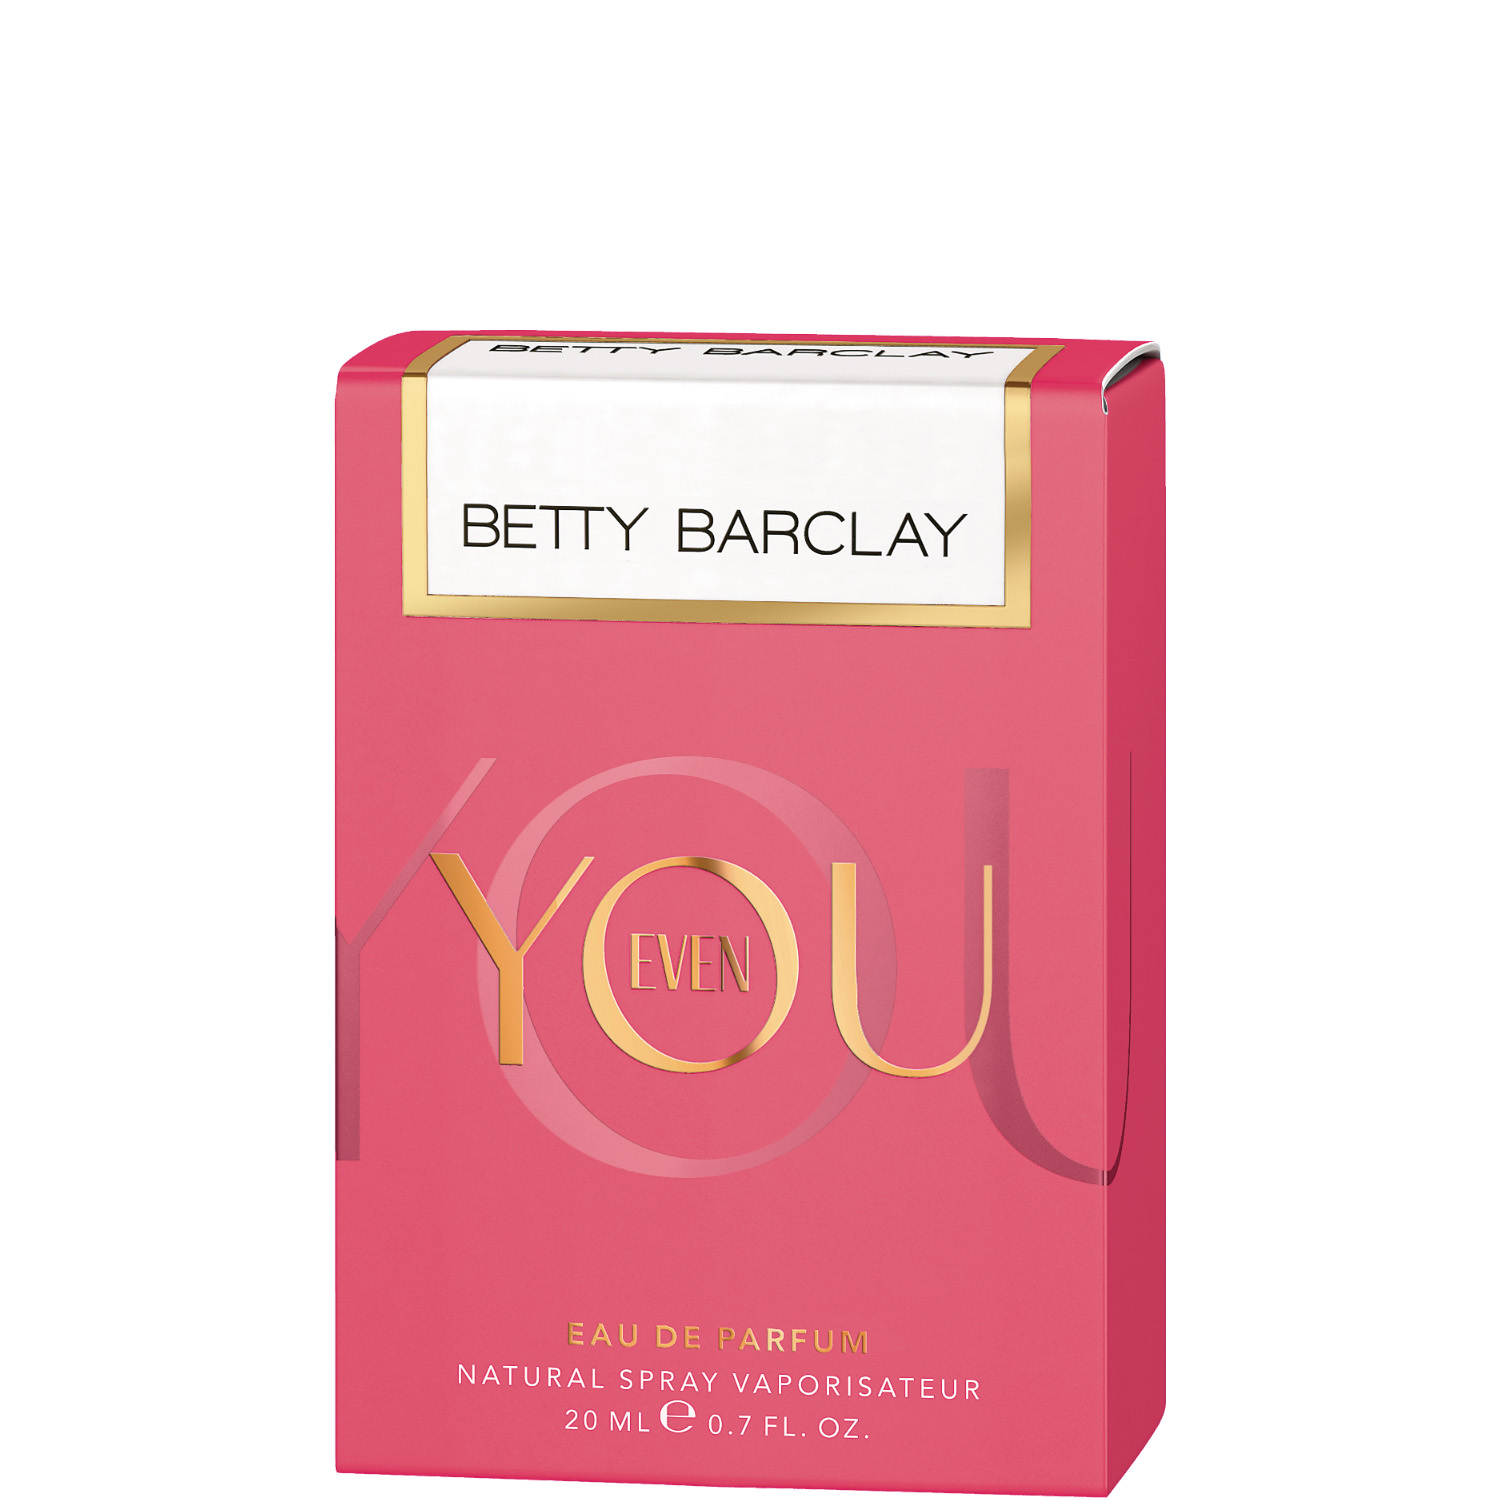 Betty Barclay Even You Eau de Parfum 20ml